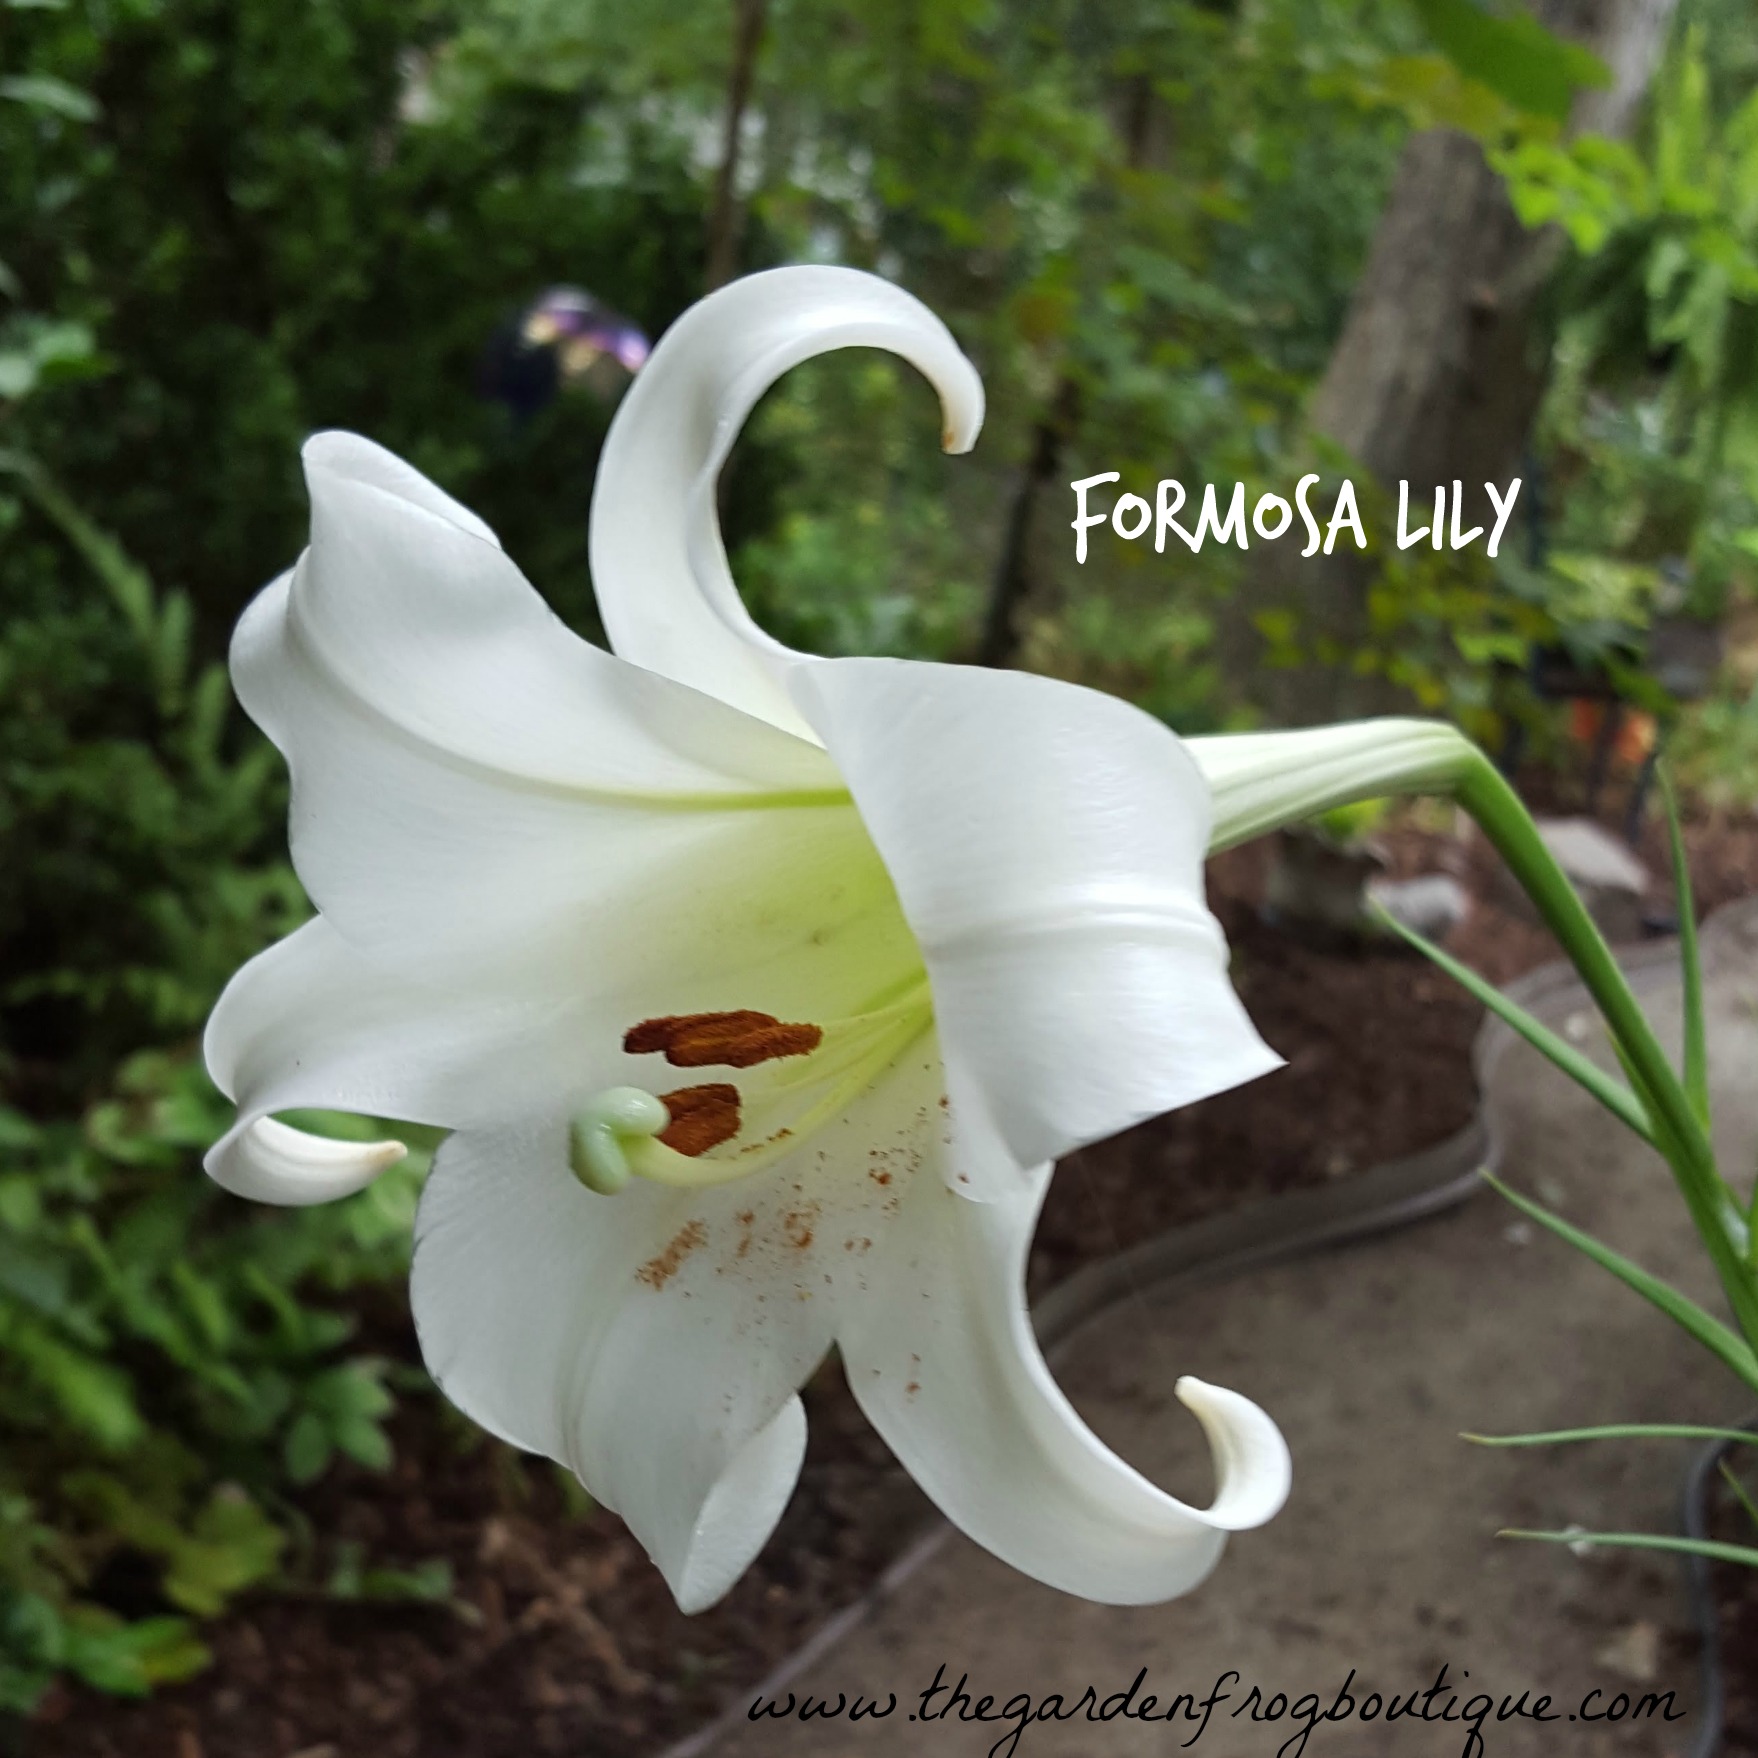 Formosa lily, Formosan lily, Lilium formosanum